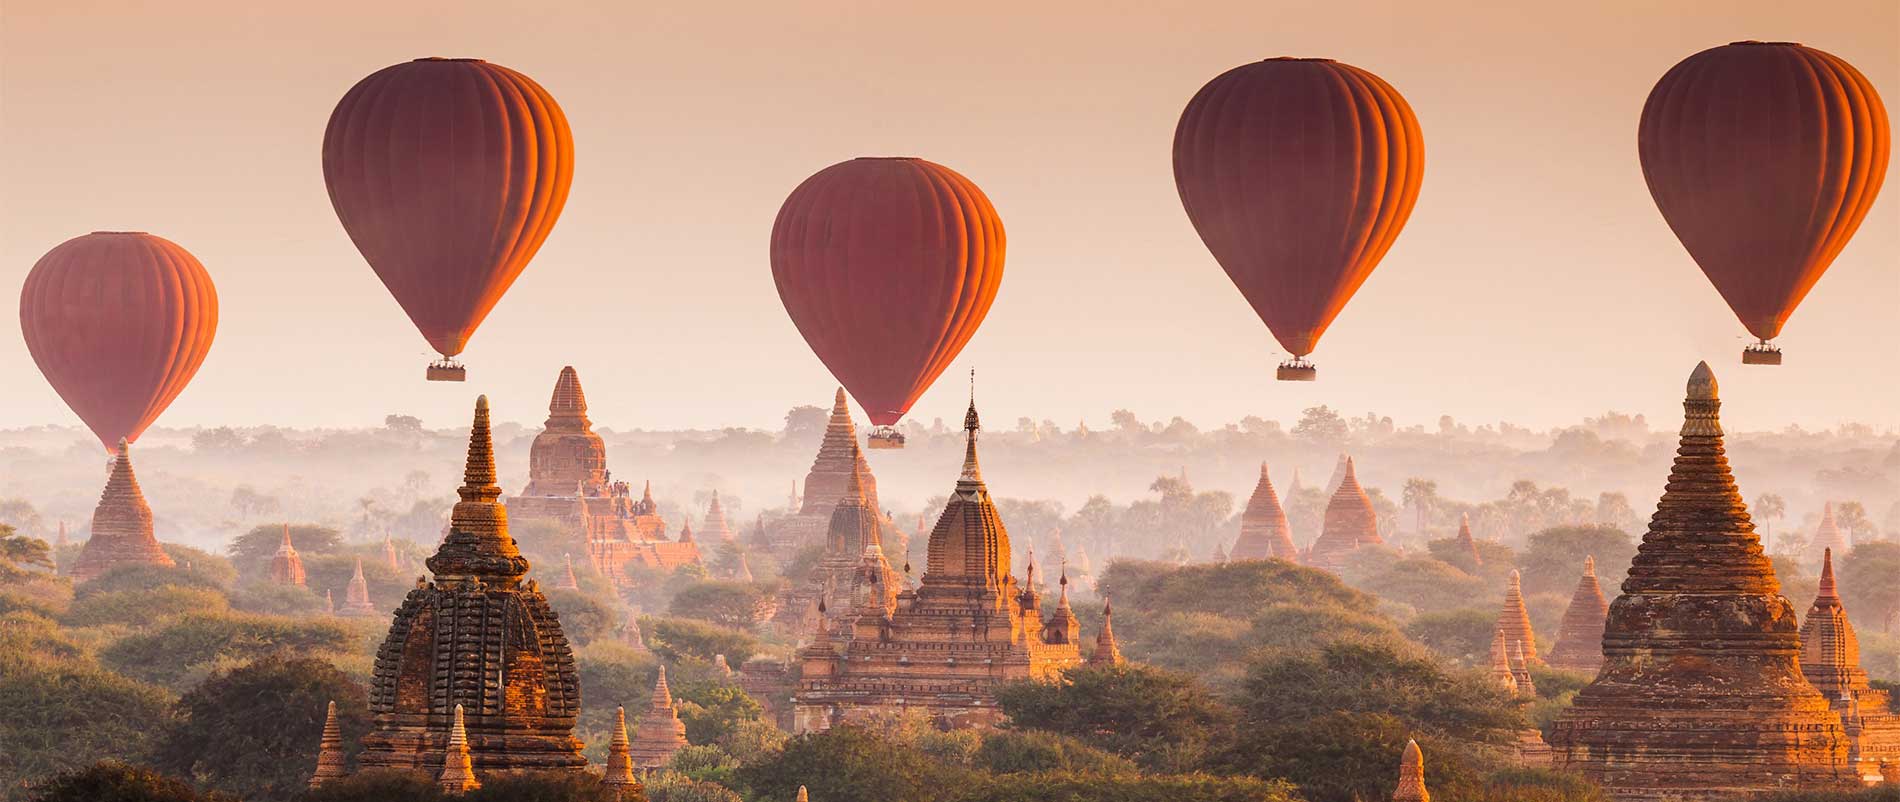 L’ancien royaume de Bagan et ses 2300 temples 